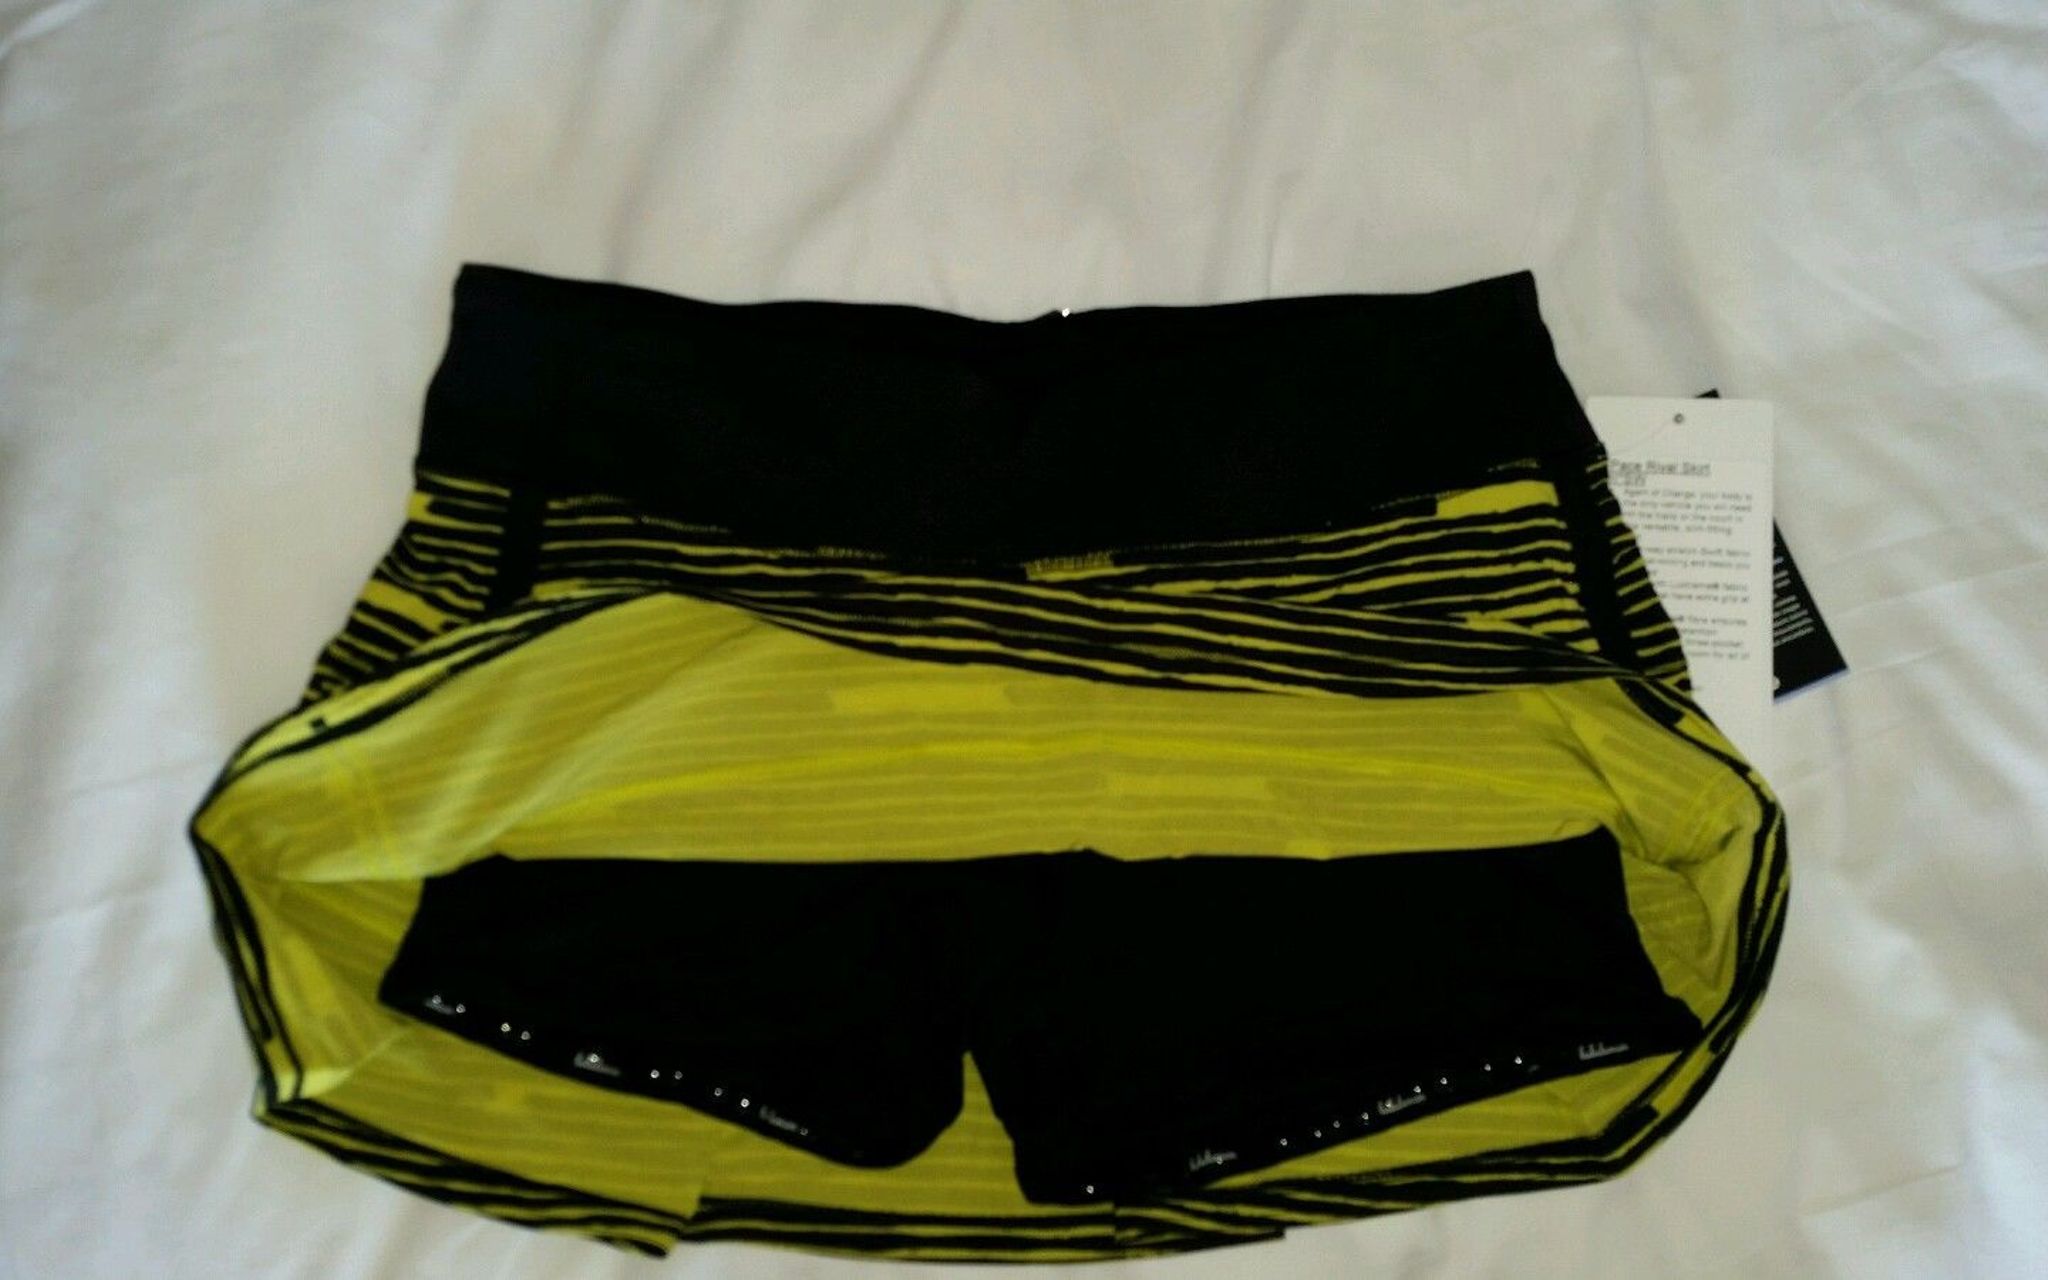 Lululemon Pace Rival Skirt II (Regular) - 2016 Seawheeze - Blacked Out / Black